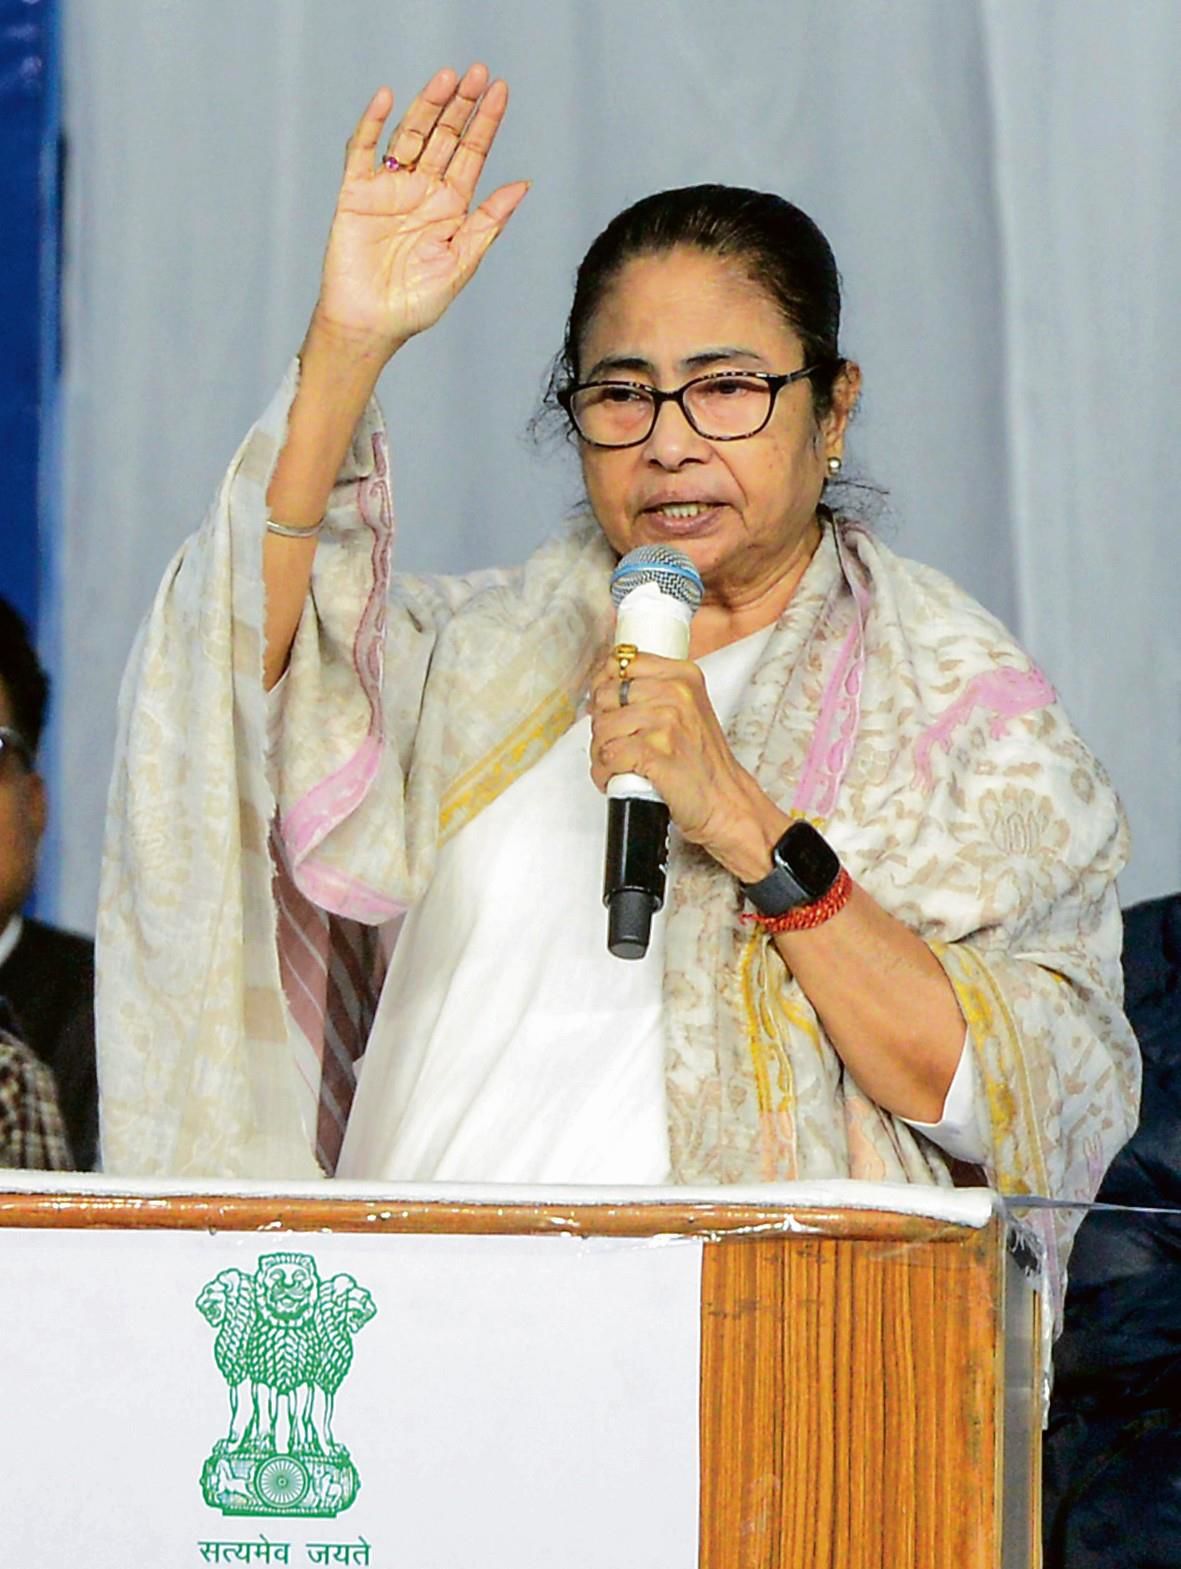 ‘Centre’s diktat’: West Bengal CM Mamata Banerjee rejects 1 nation, 1 poll